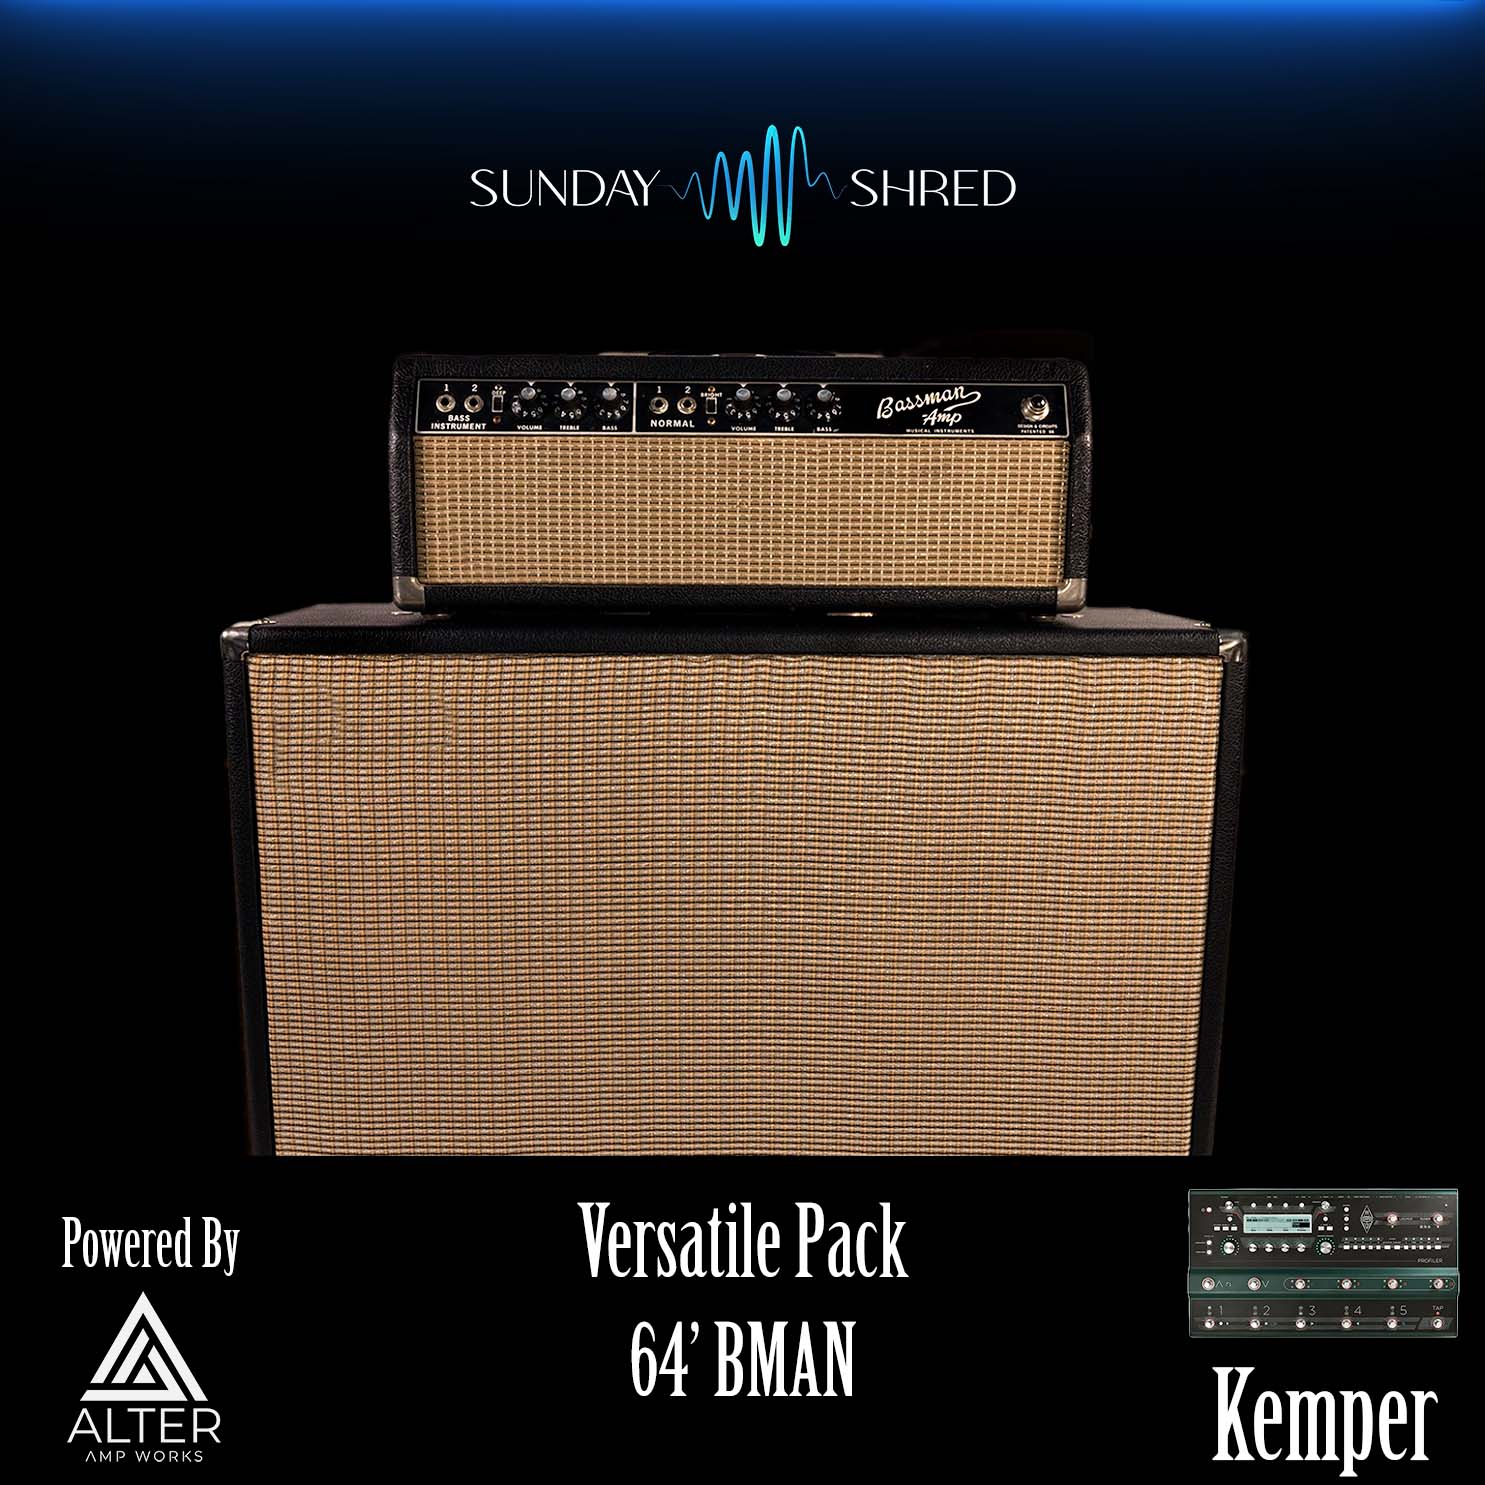 Sunday Shred - Versatile Pack - 64 BMAN - Kemper Performance